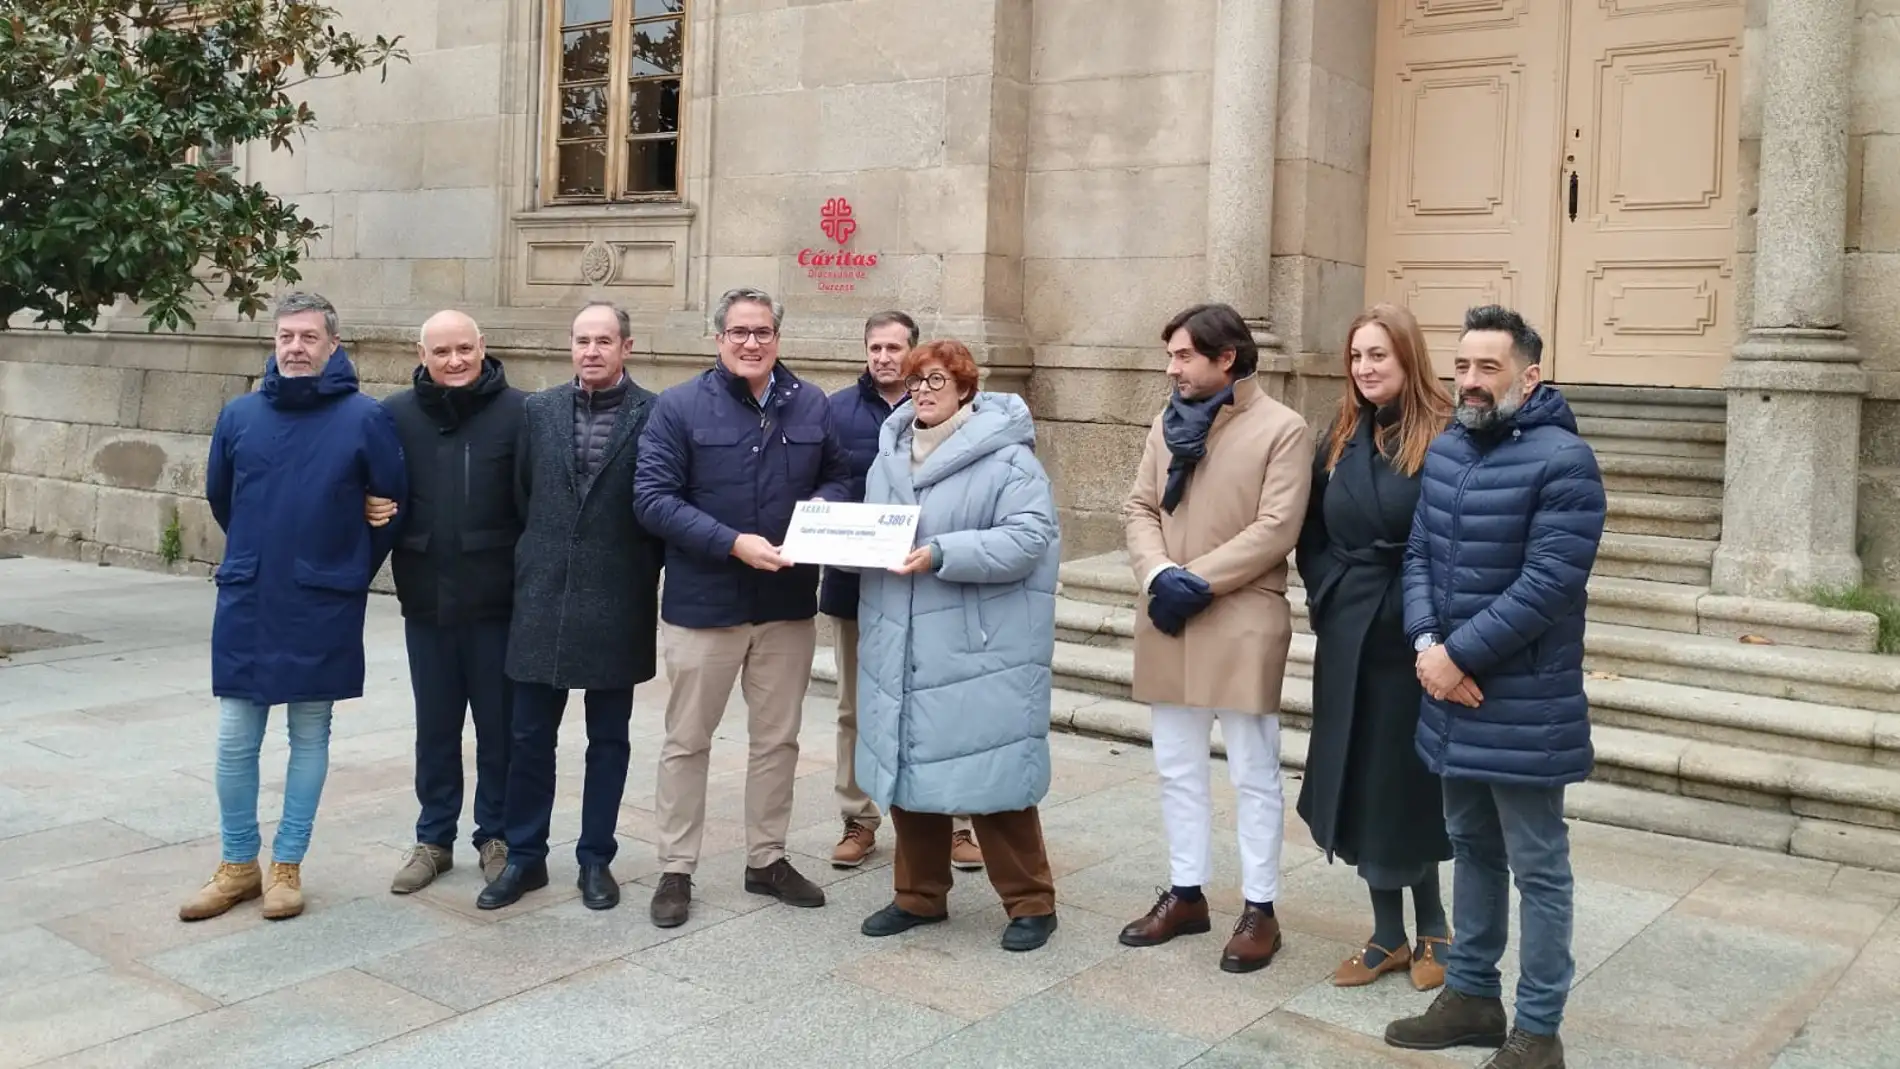 Acauto entregó su cheque solidario a Cáritas por un valor de 4.380 euros